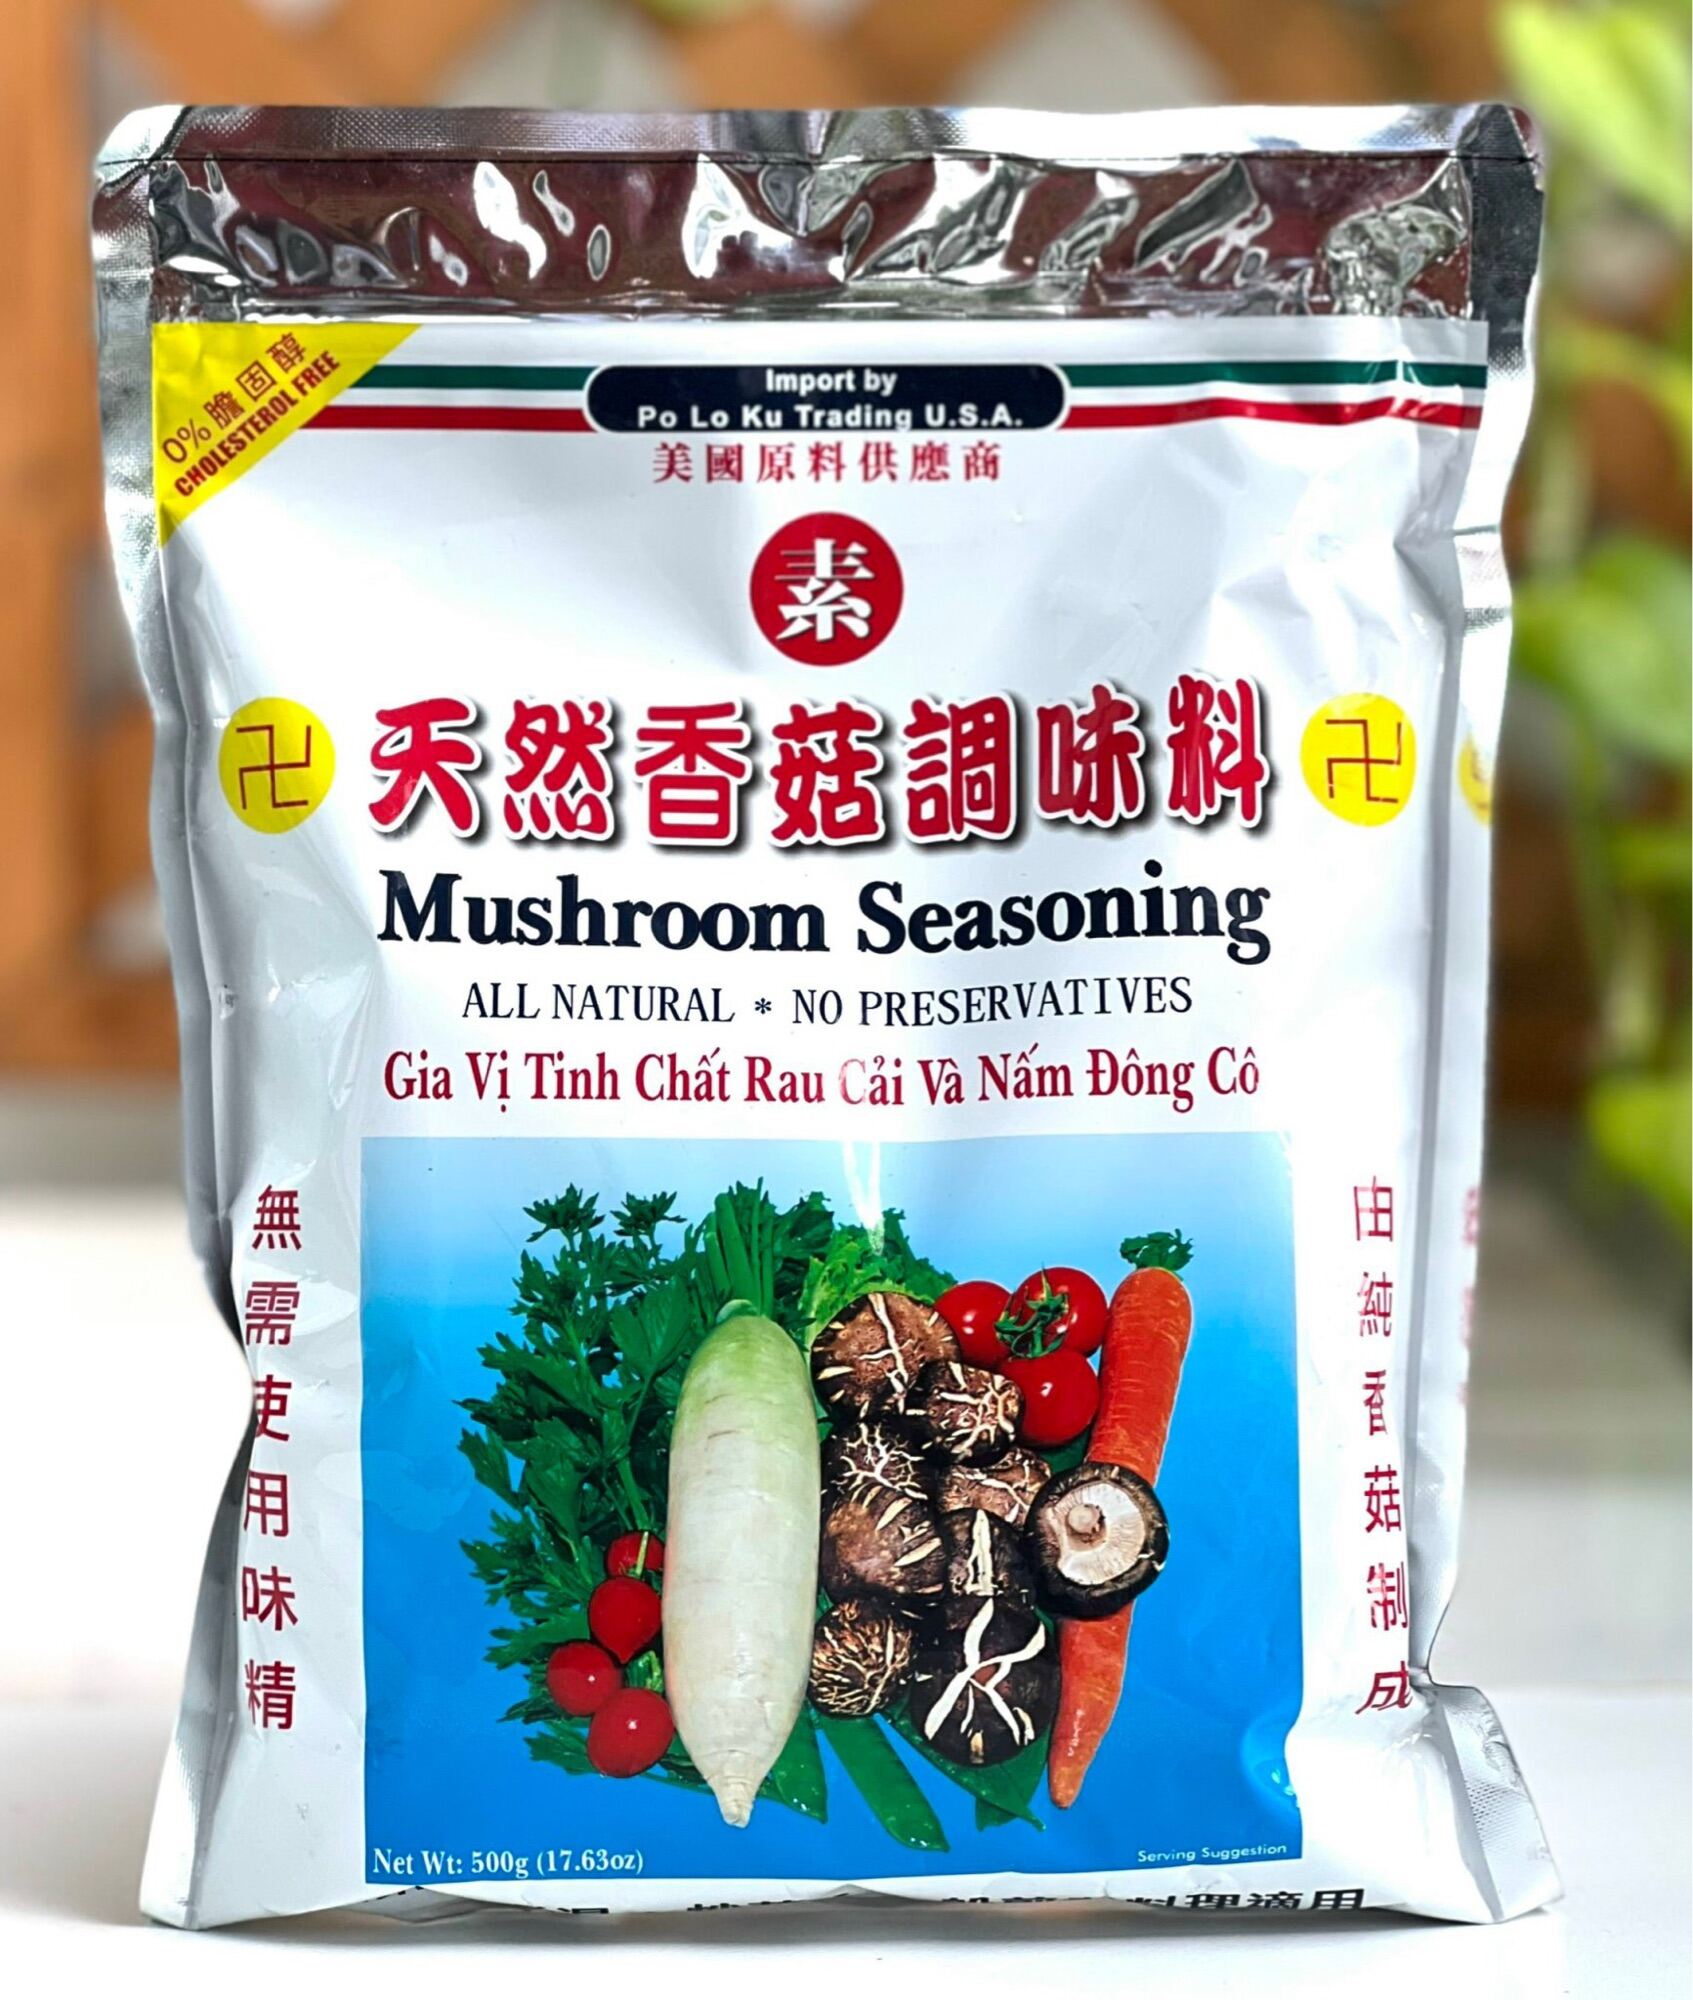 Po Lo Ku All Natural Mushroom Seasoning, 17.63oz - Pack of 1